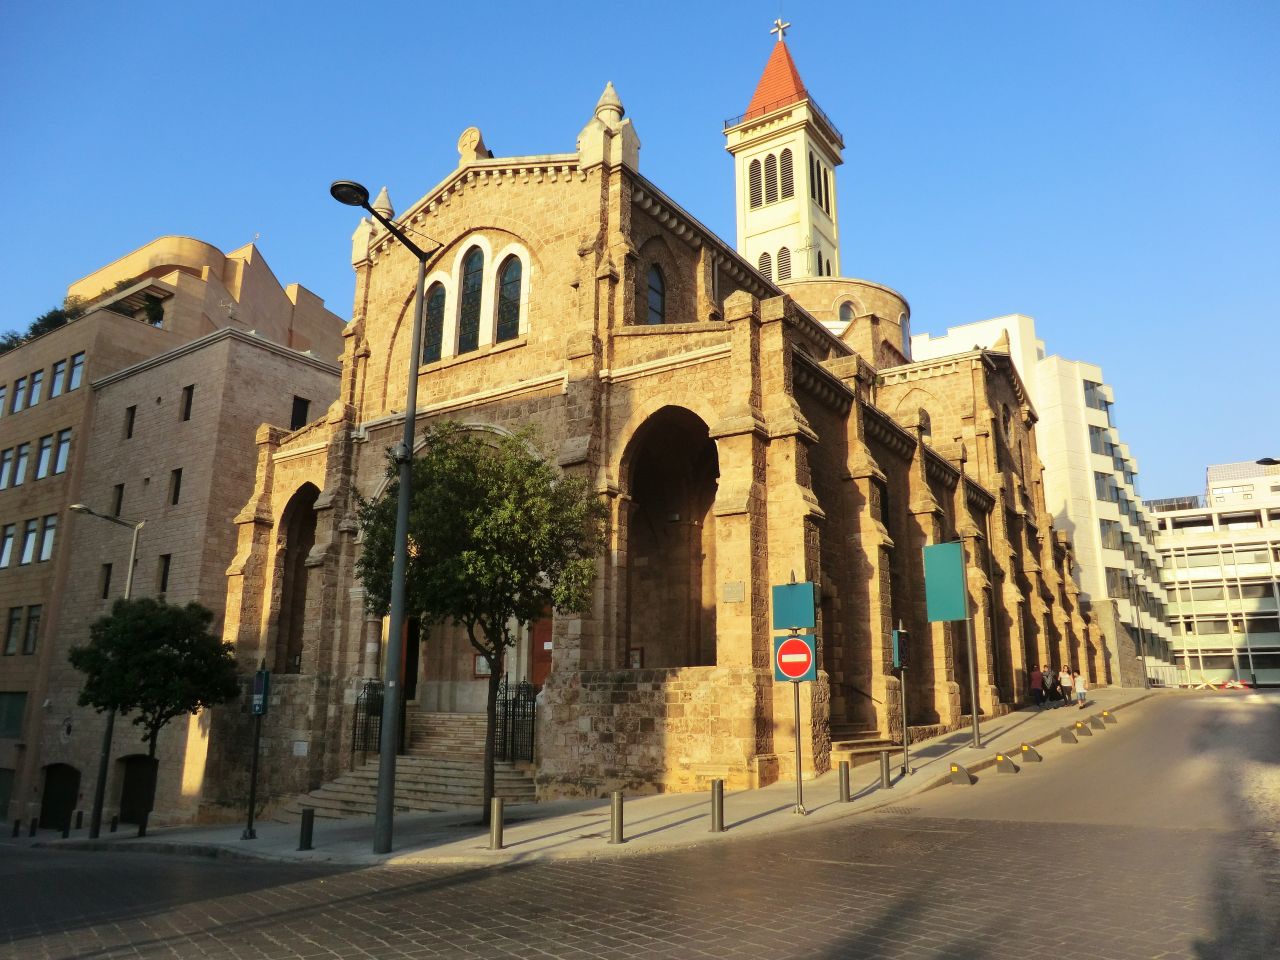 Libanon / Beirut - Teil 3